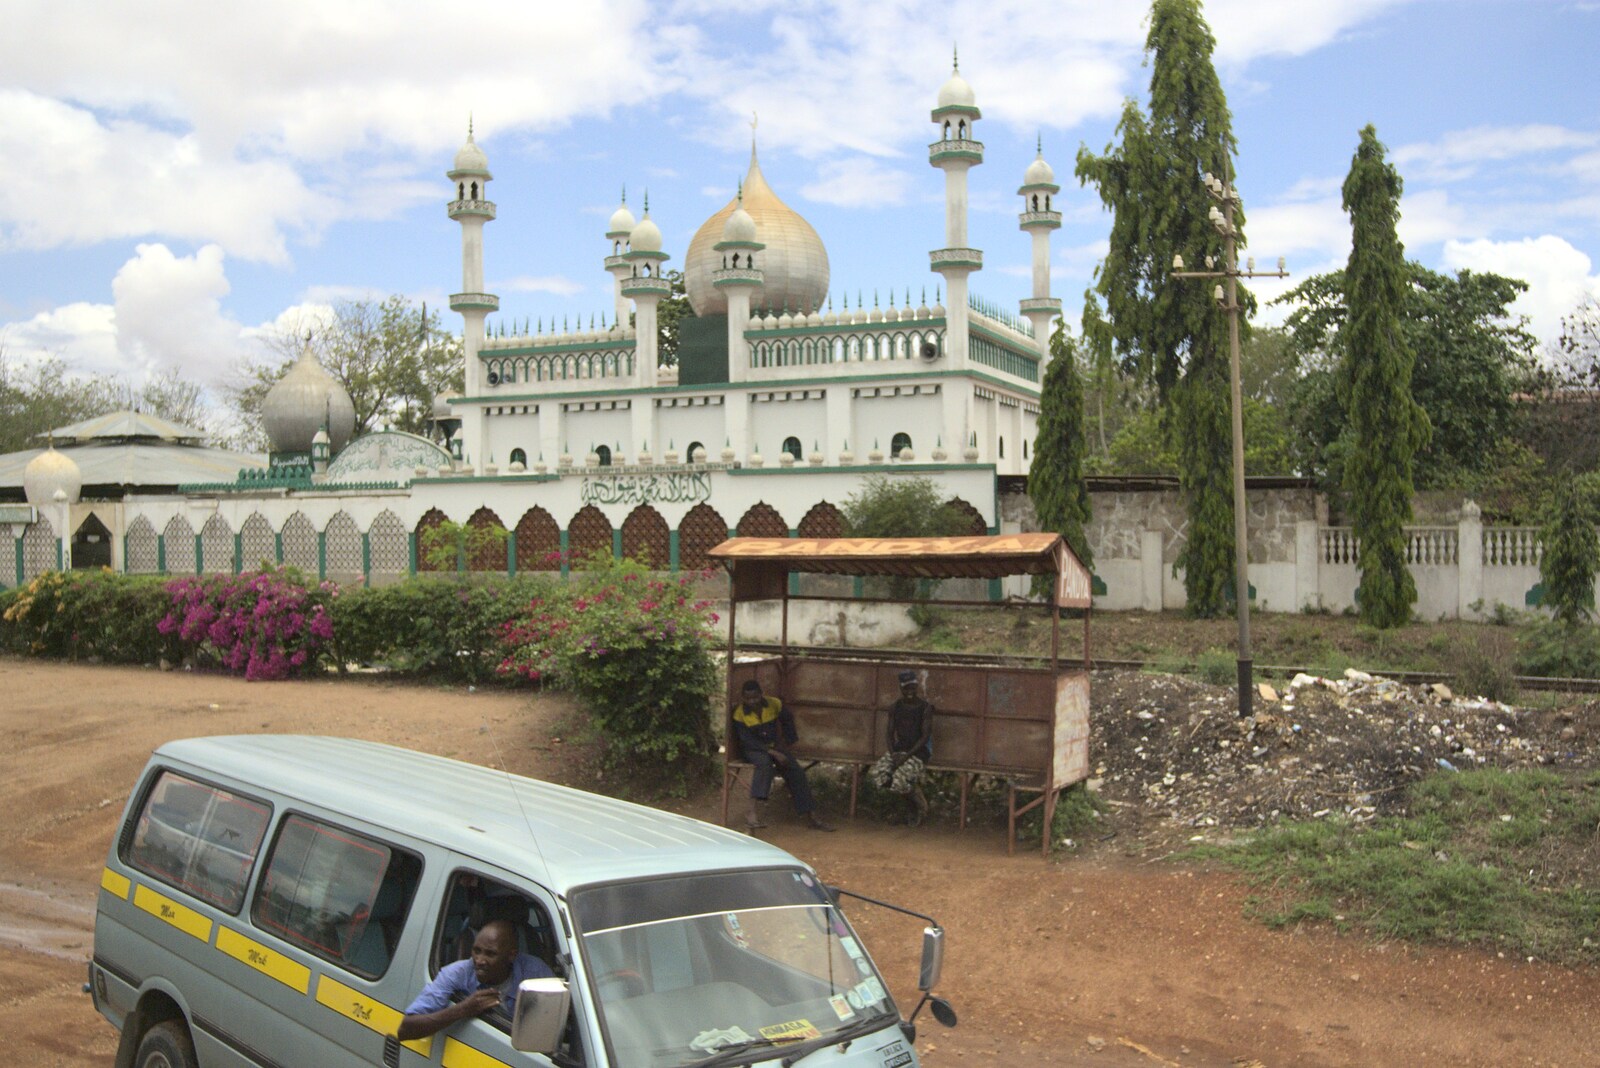 A mosque from Long Train (not) Runnin': Tiwi Beach, Mombasa, Kenya - 7th November 2010